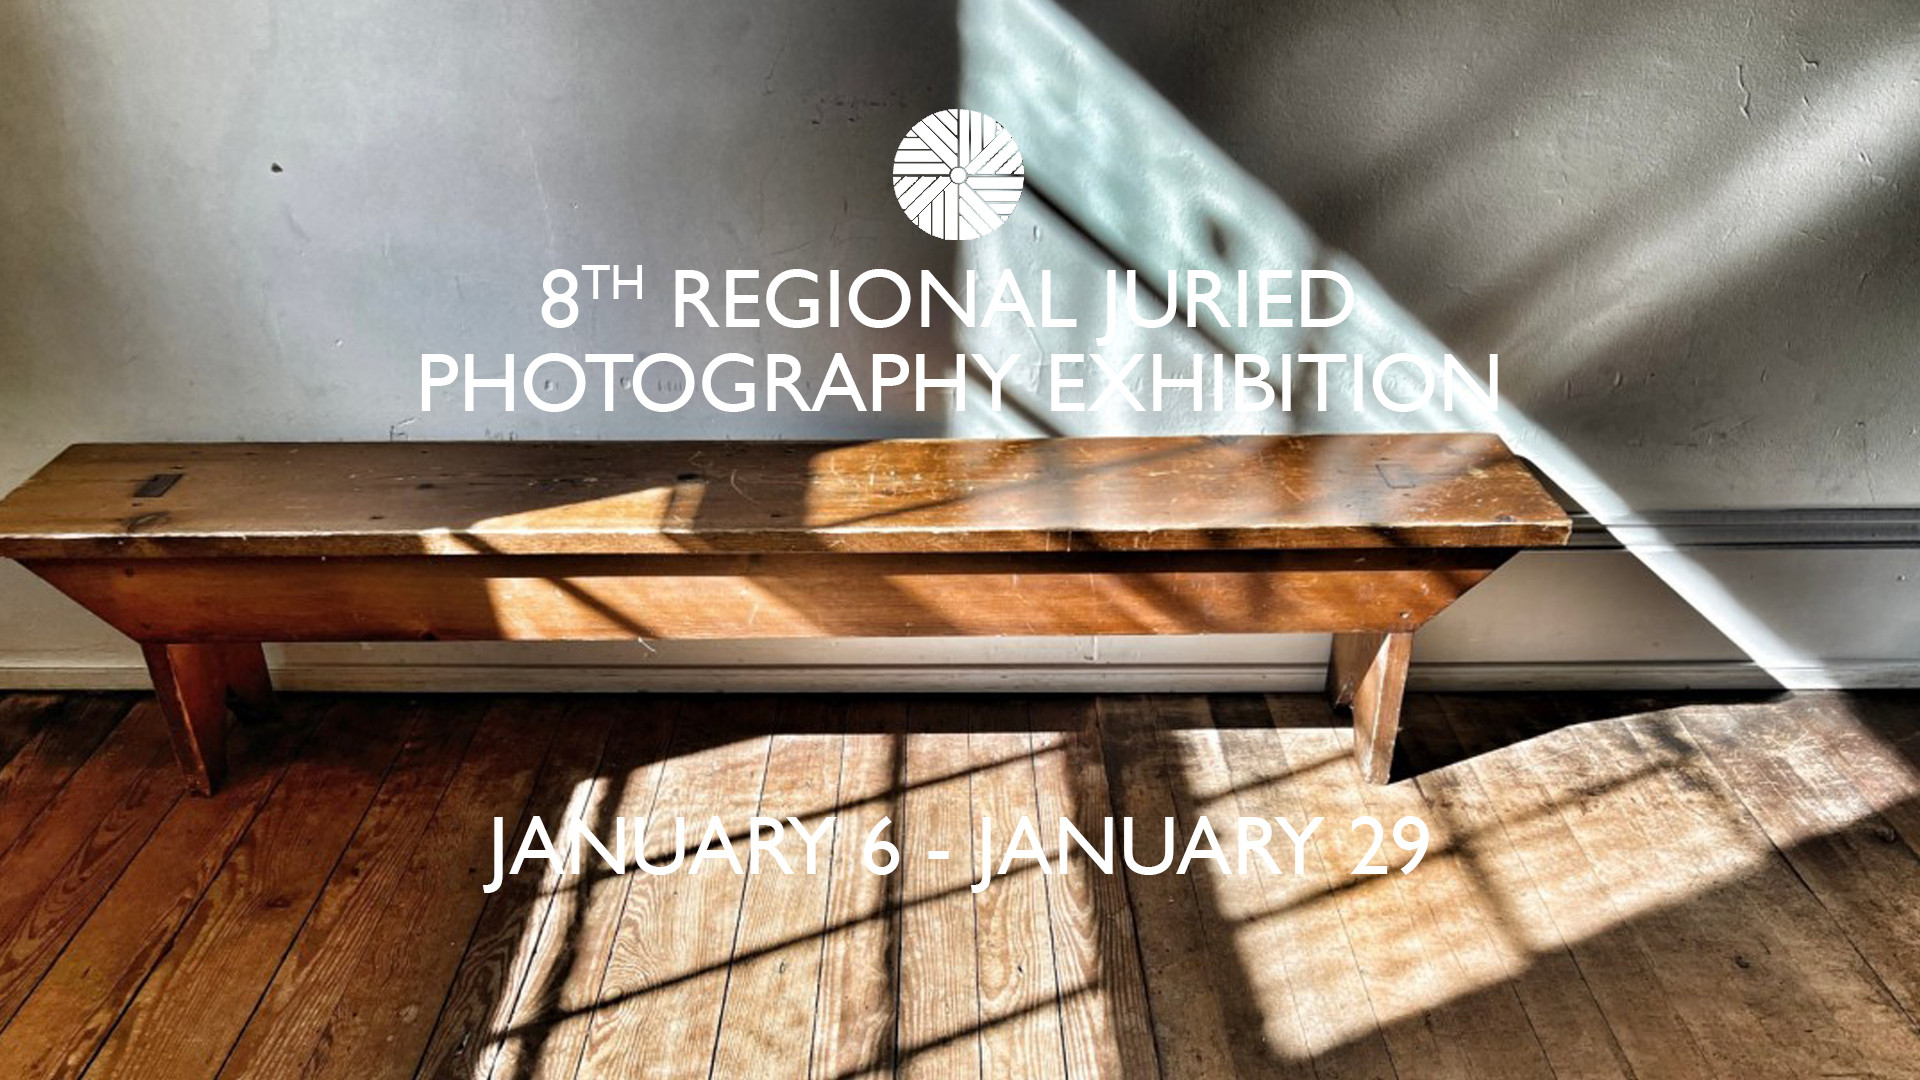 8th Regional Juried Photography Homepage